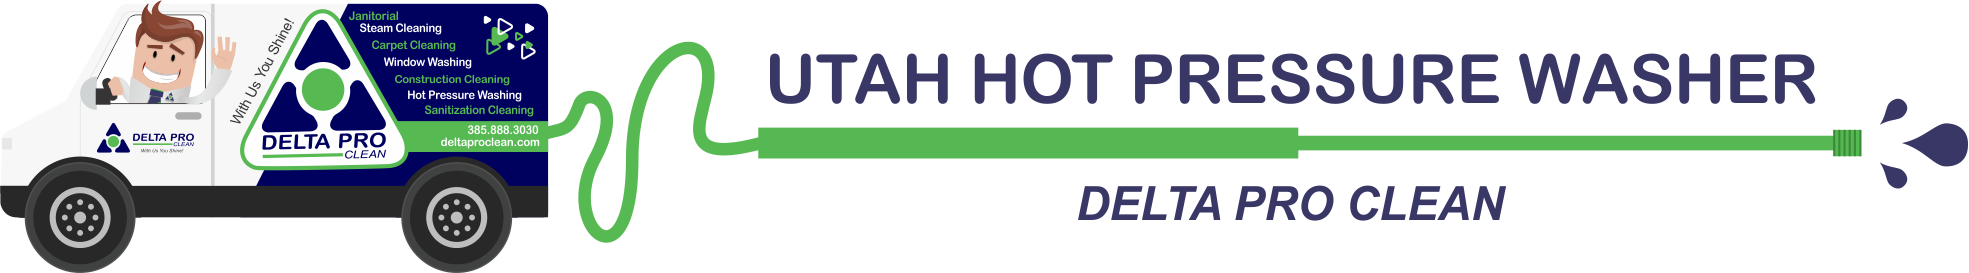 Hot Pressure Washer in Utah